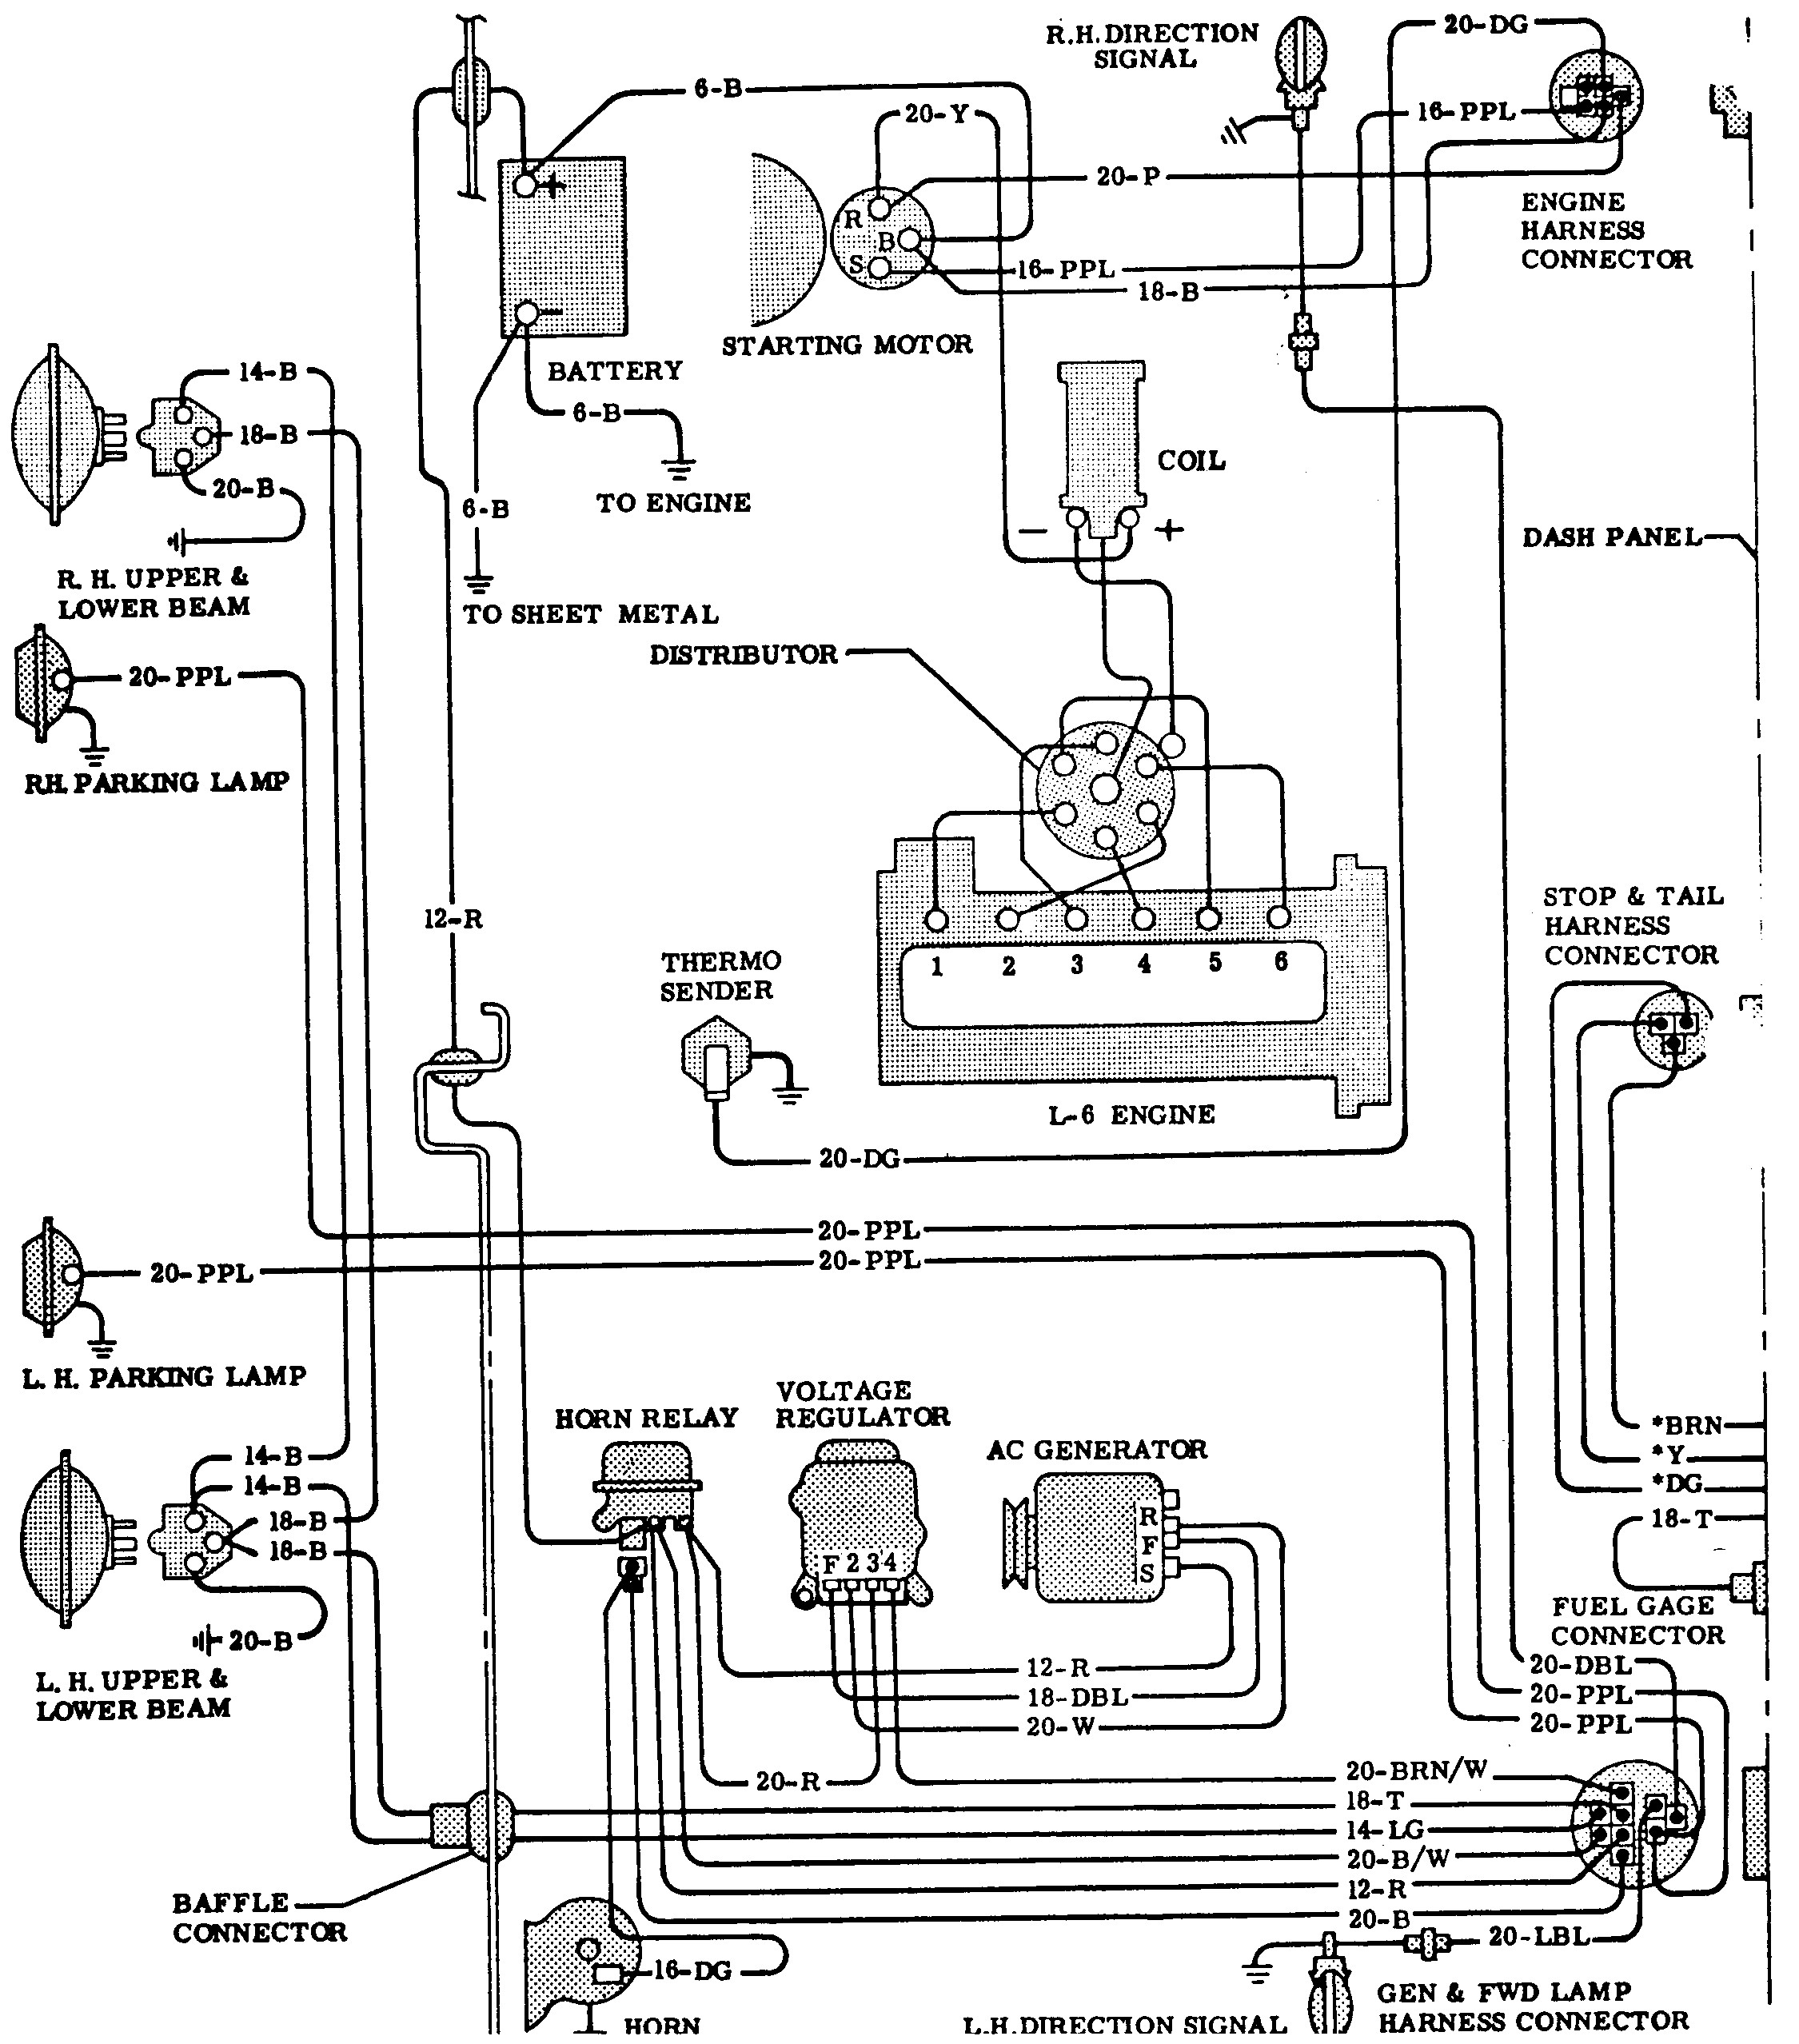 Fuel Gauge Diagram In Air Conditioning Wiring Diagram 10 Chevy Van Engine Diagram Of Fuel Gauge Diagram